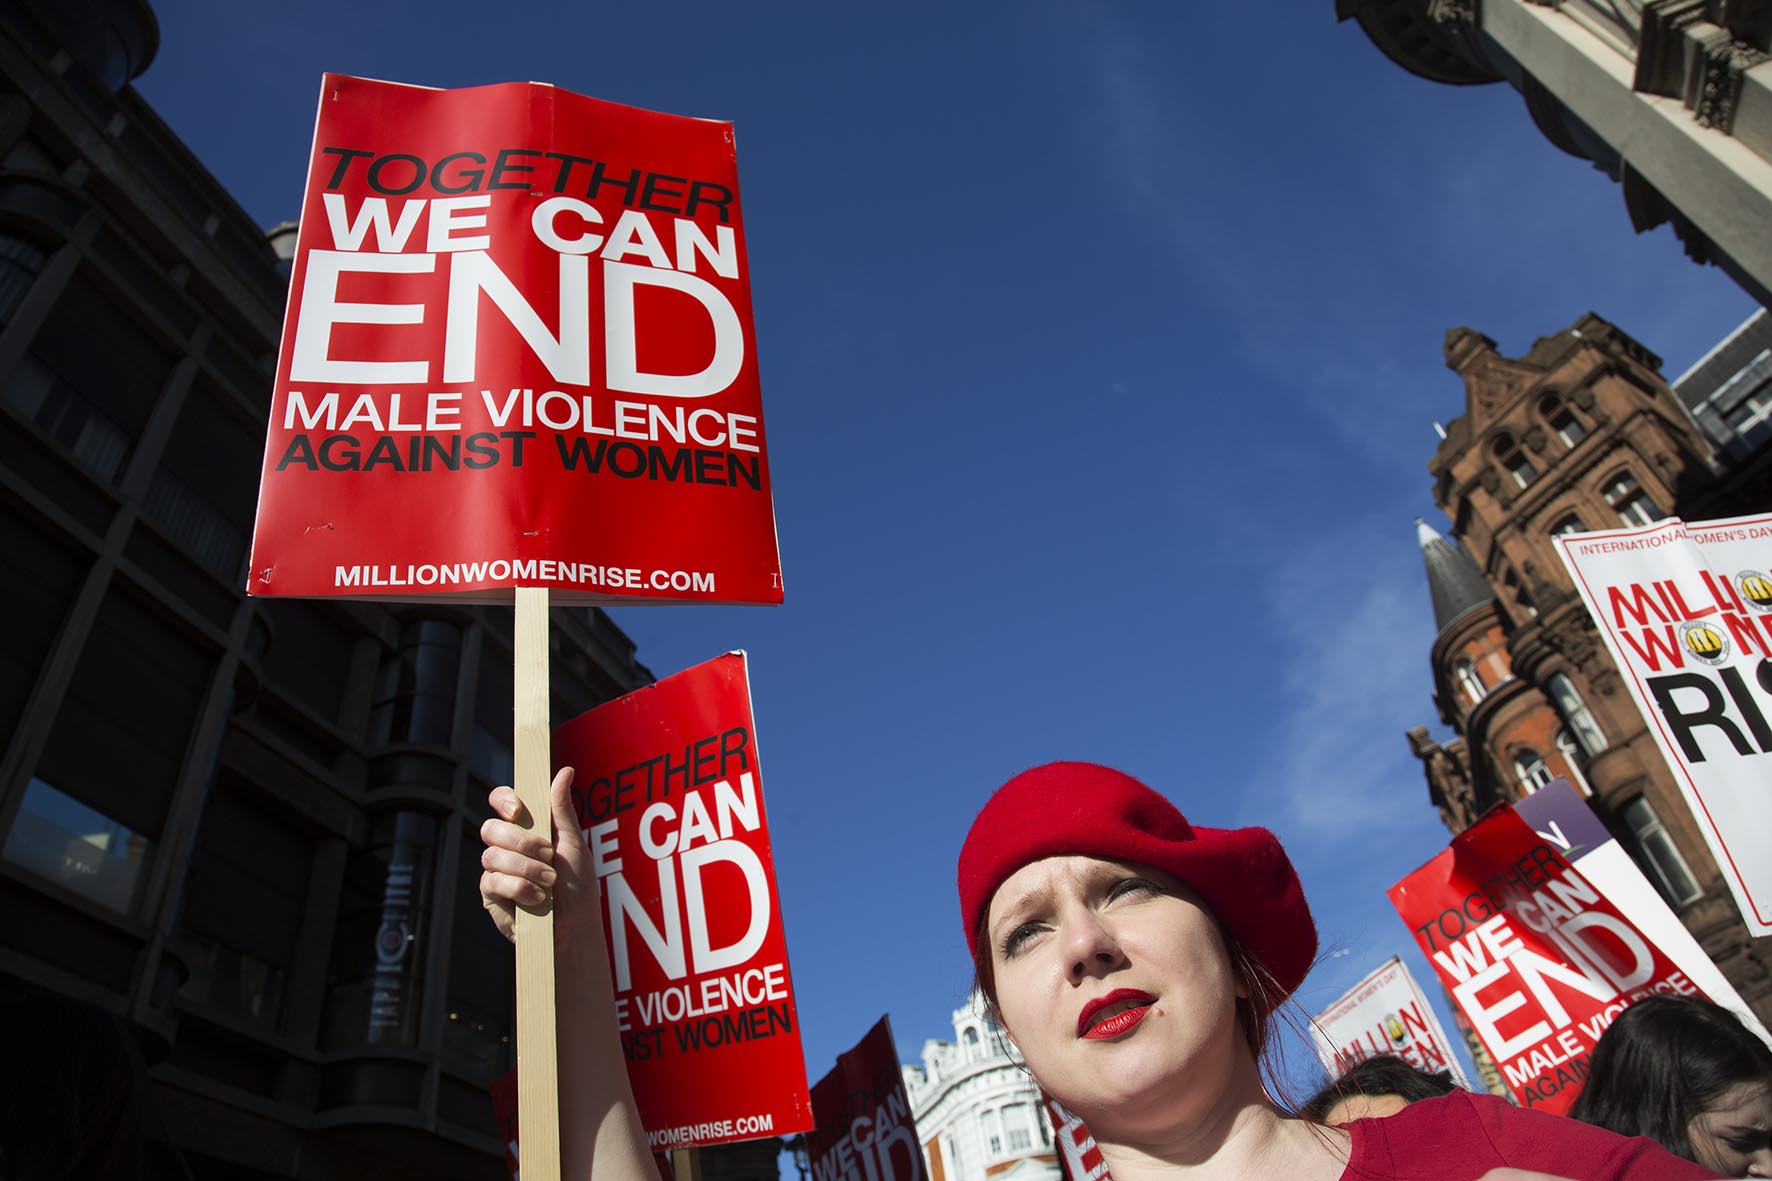  Million Women Rise march against violence towards women in London. 